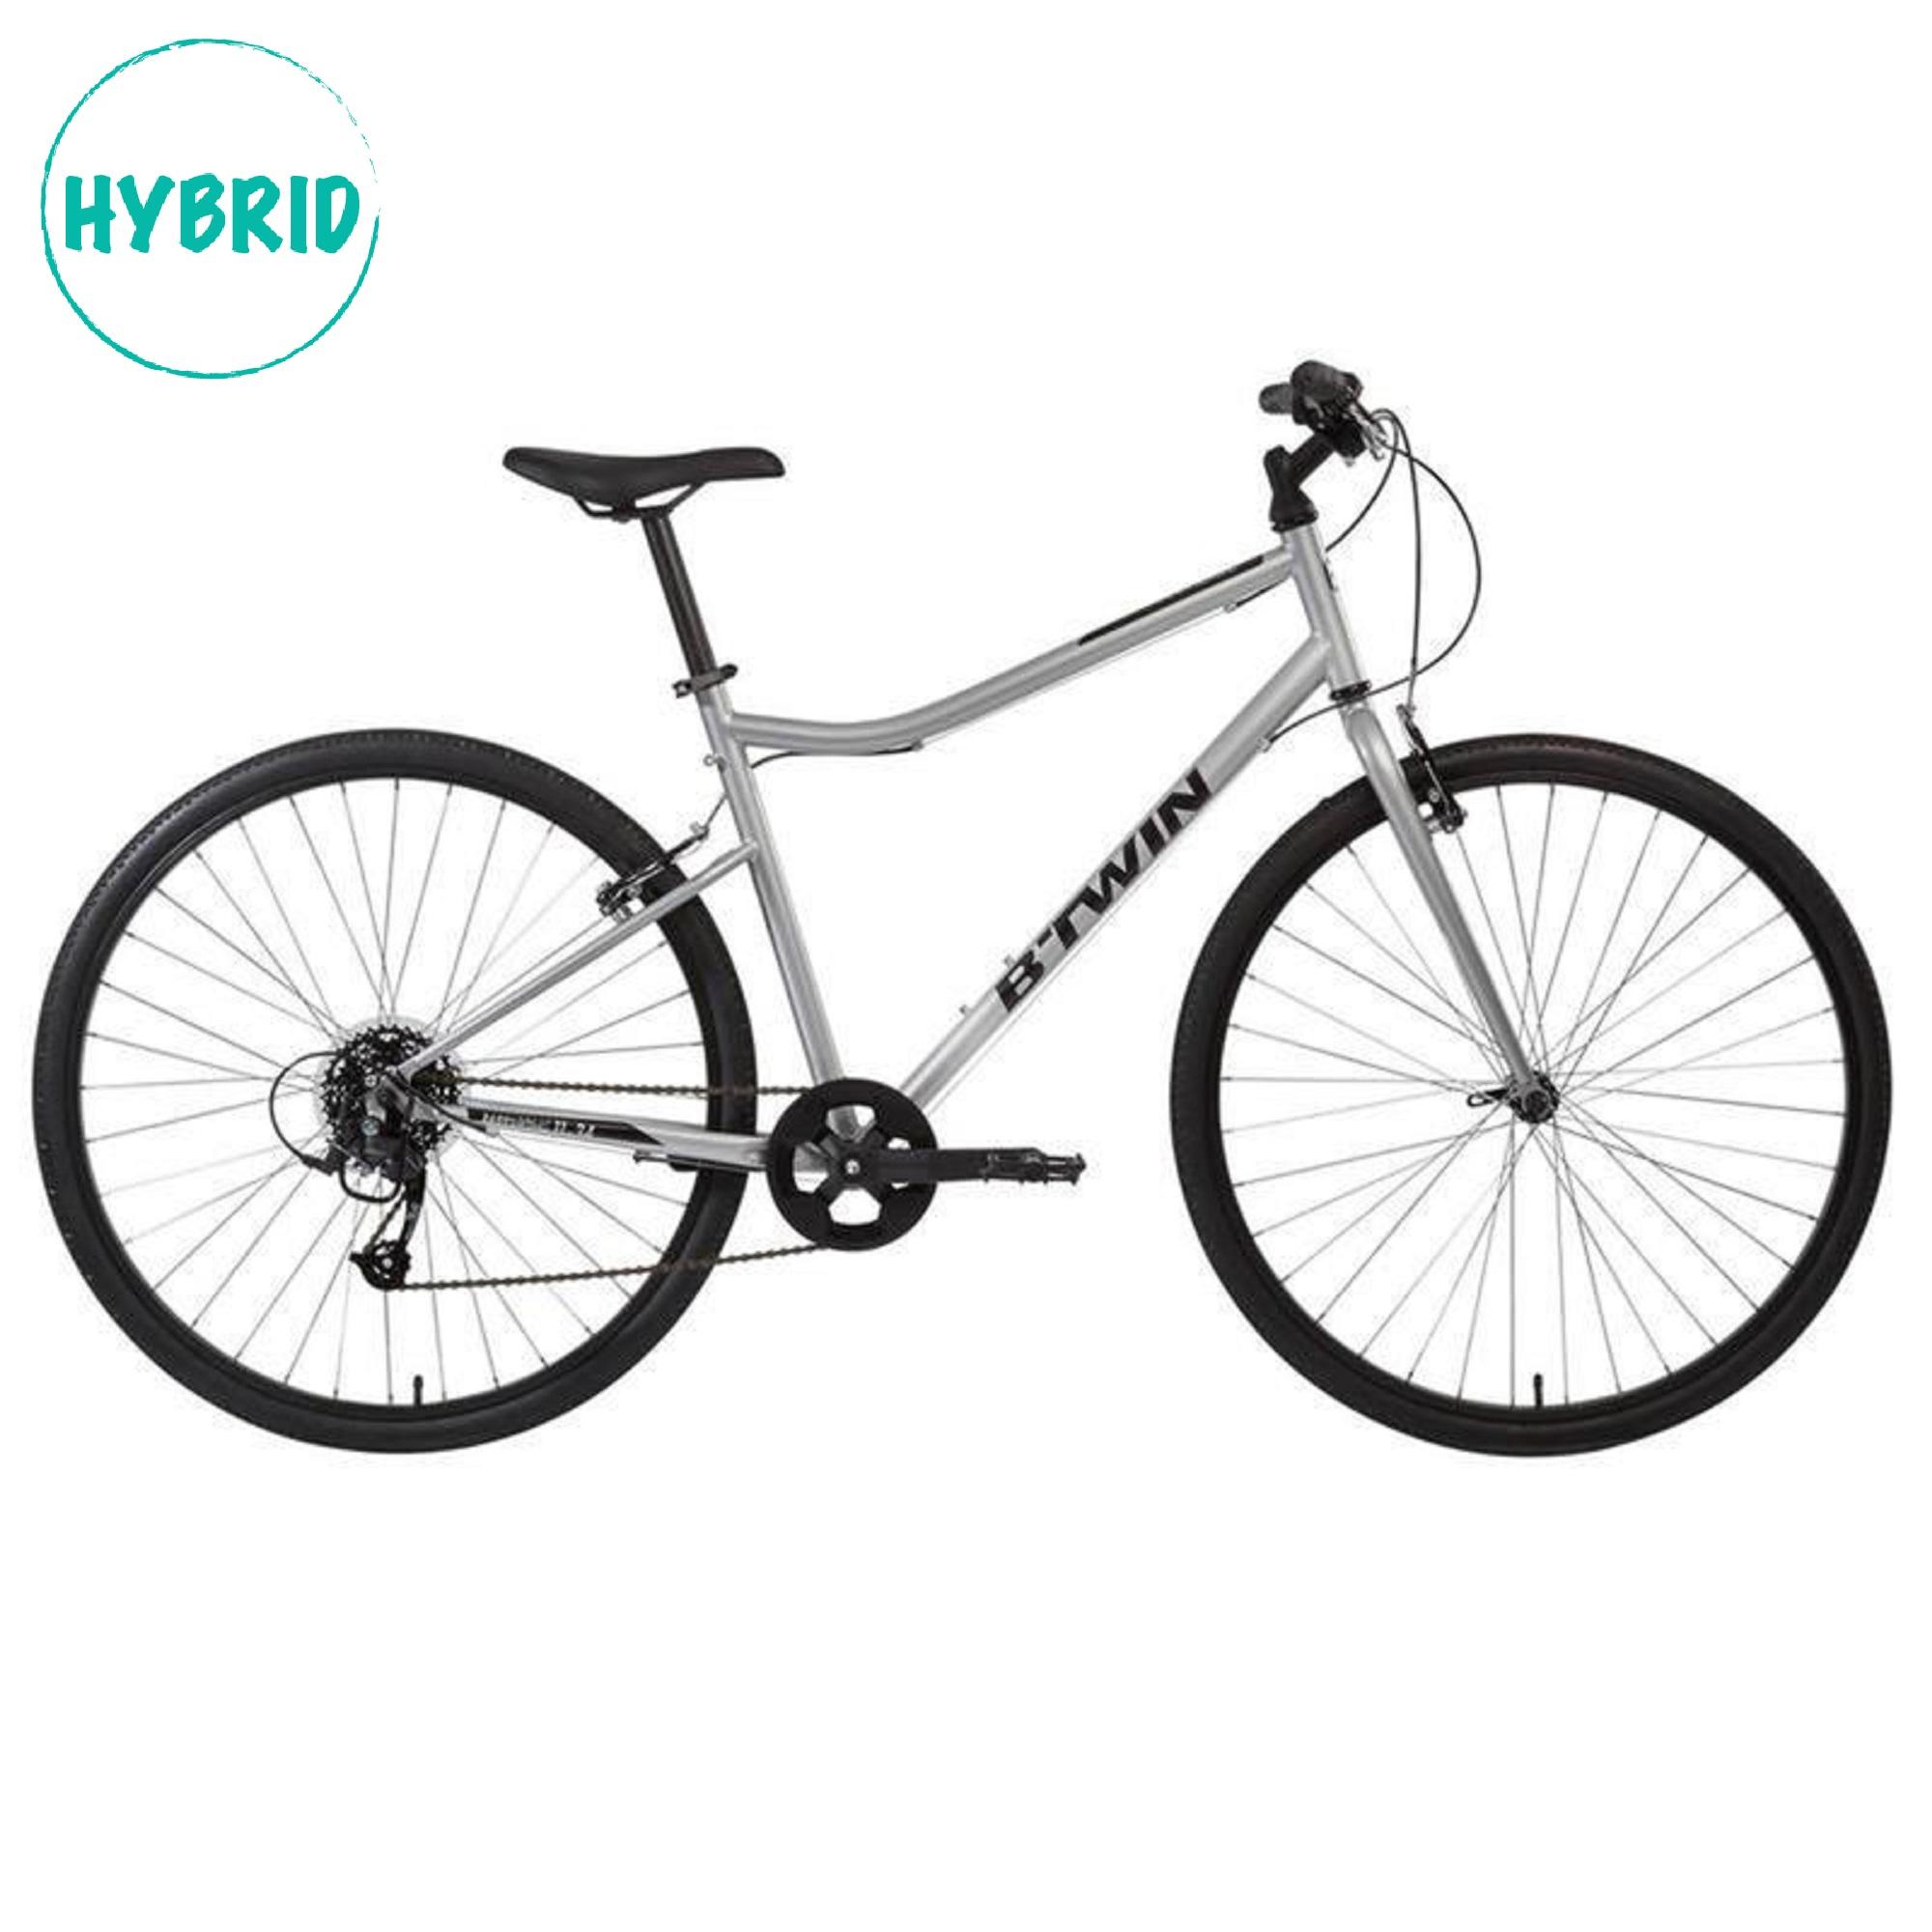 decathlon hybrid bike